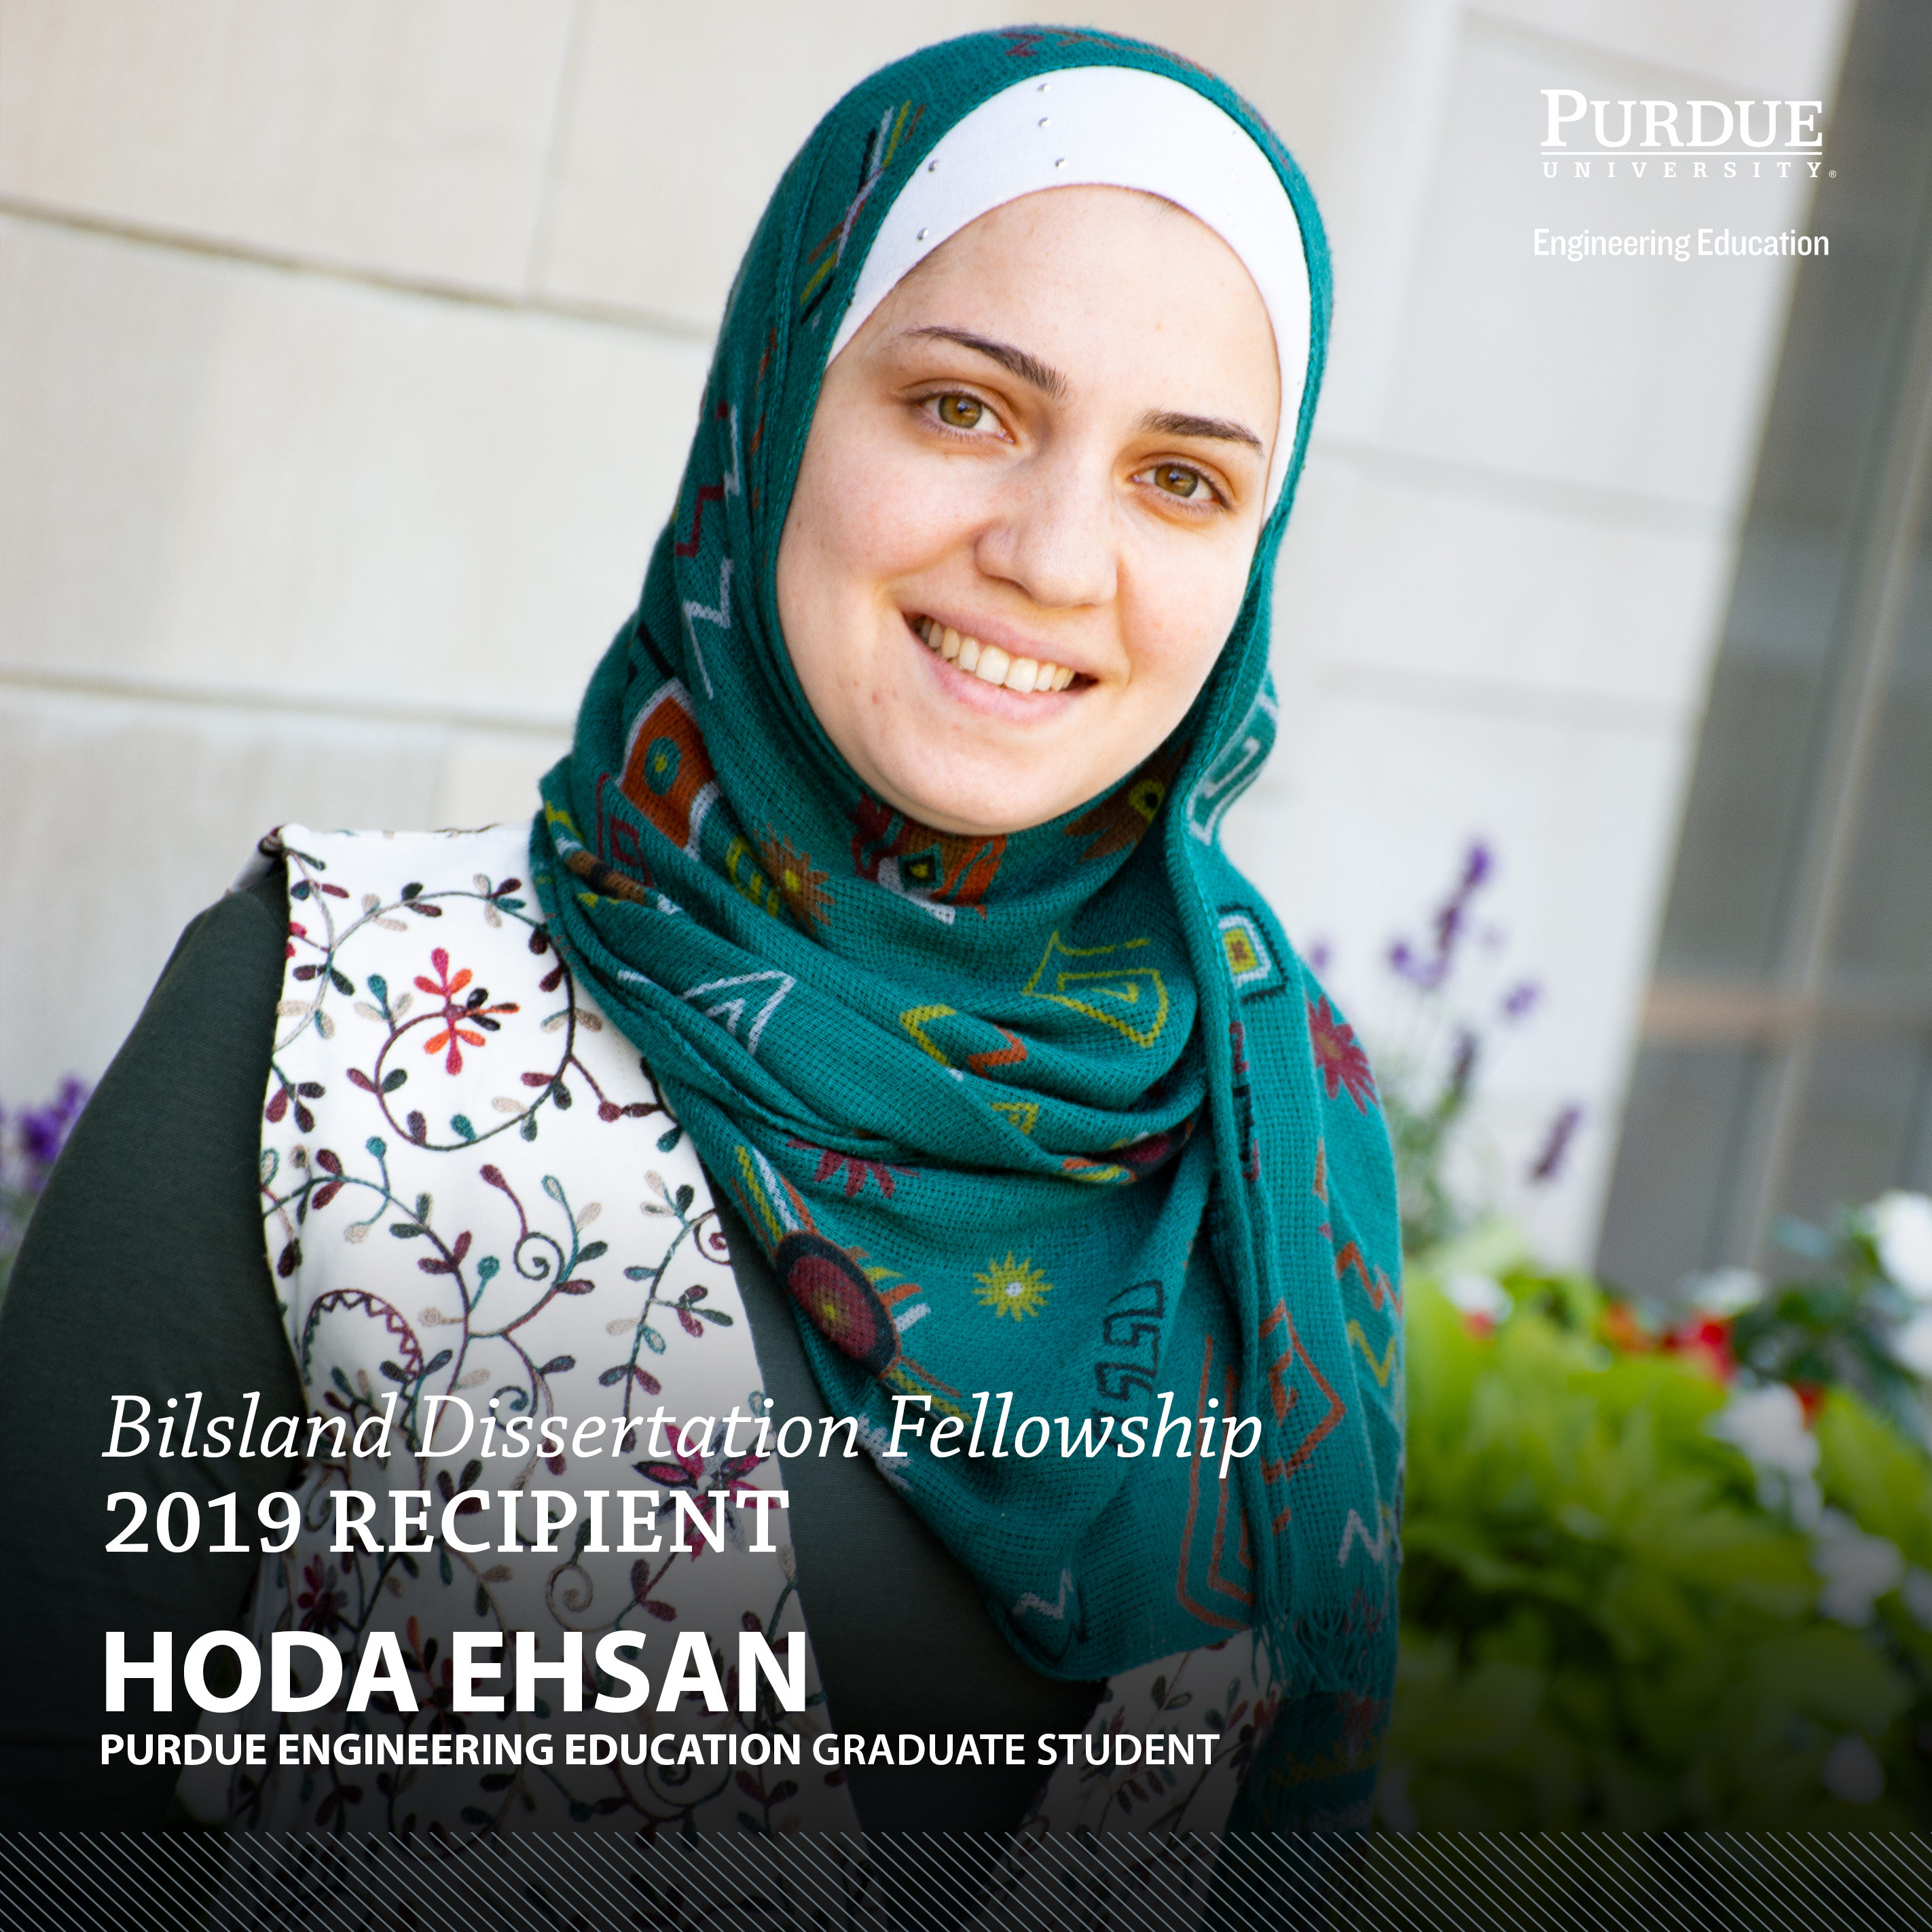 Hoda Ehsan